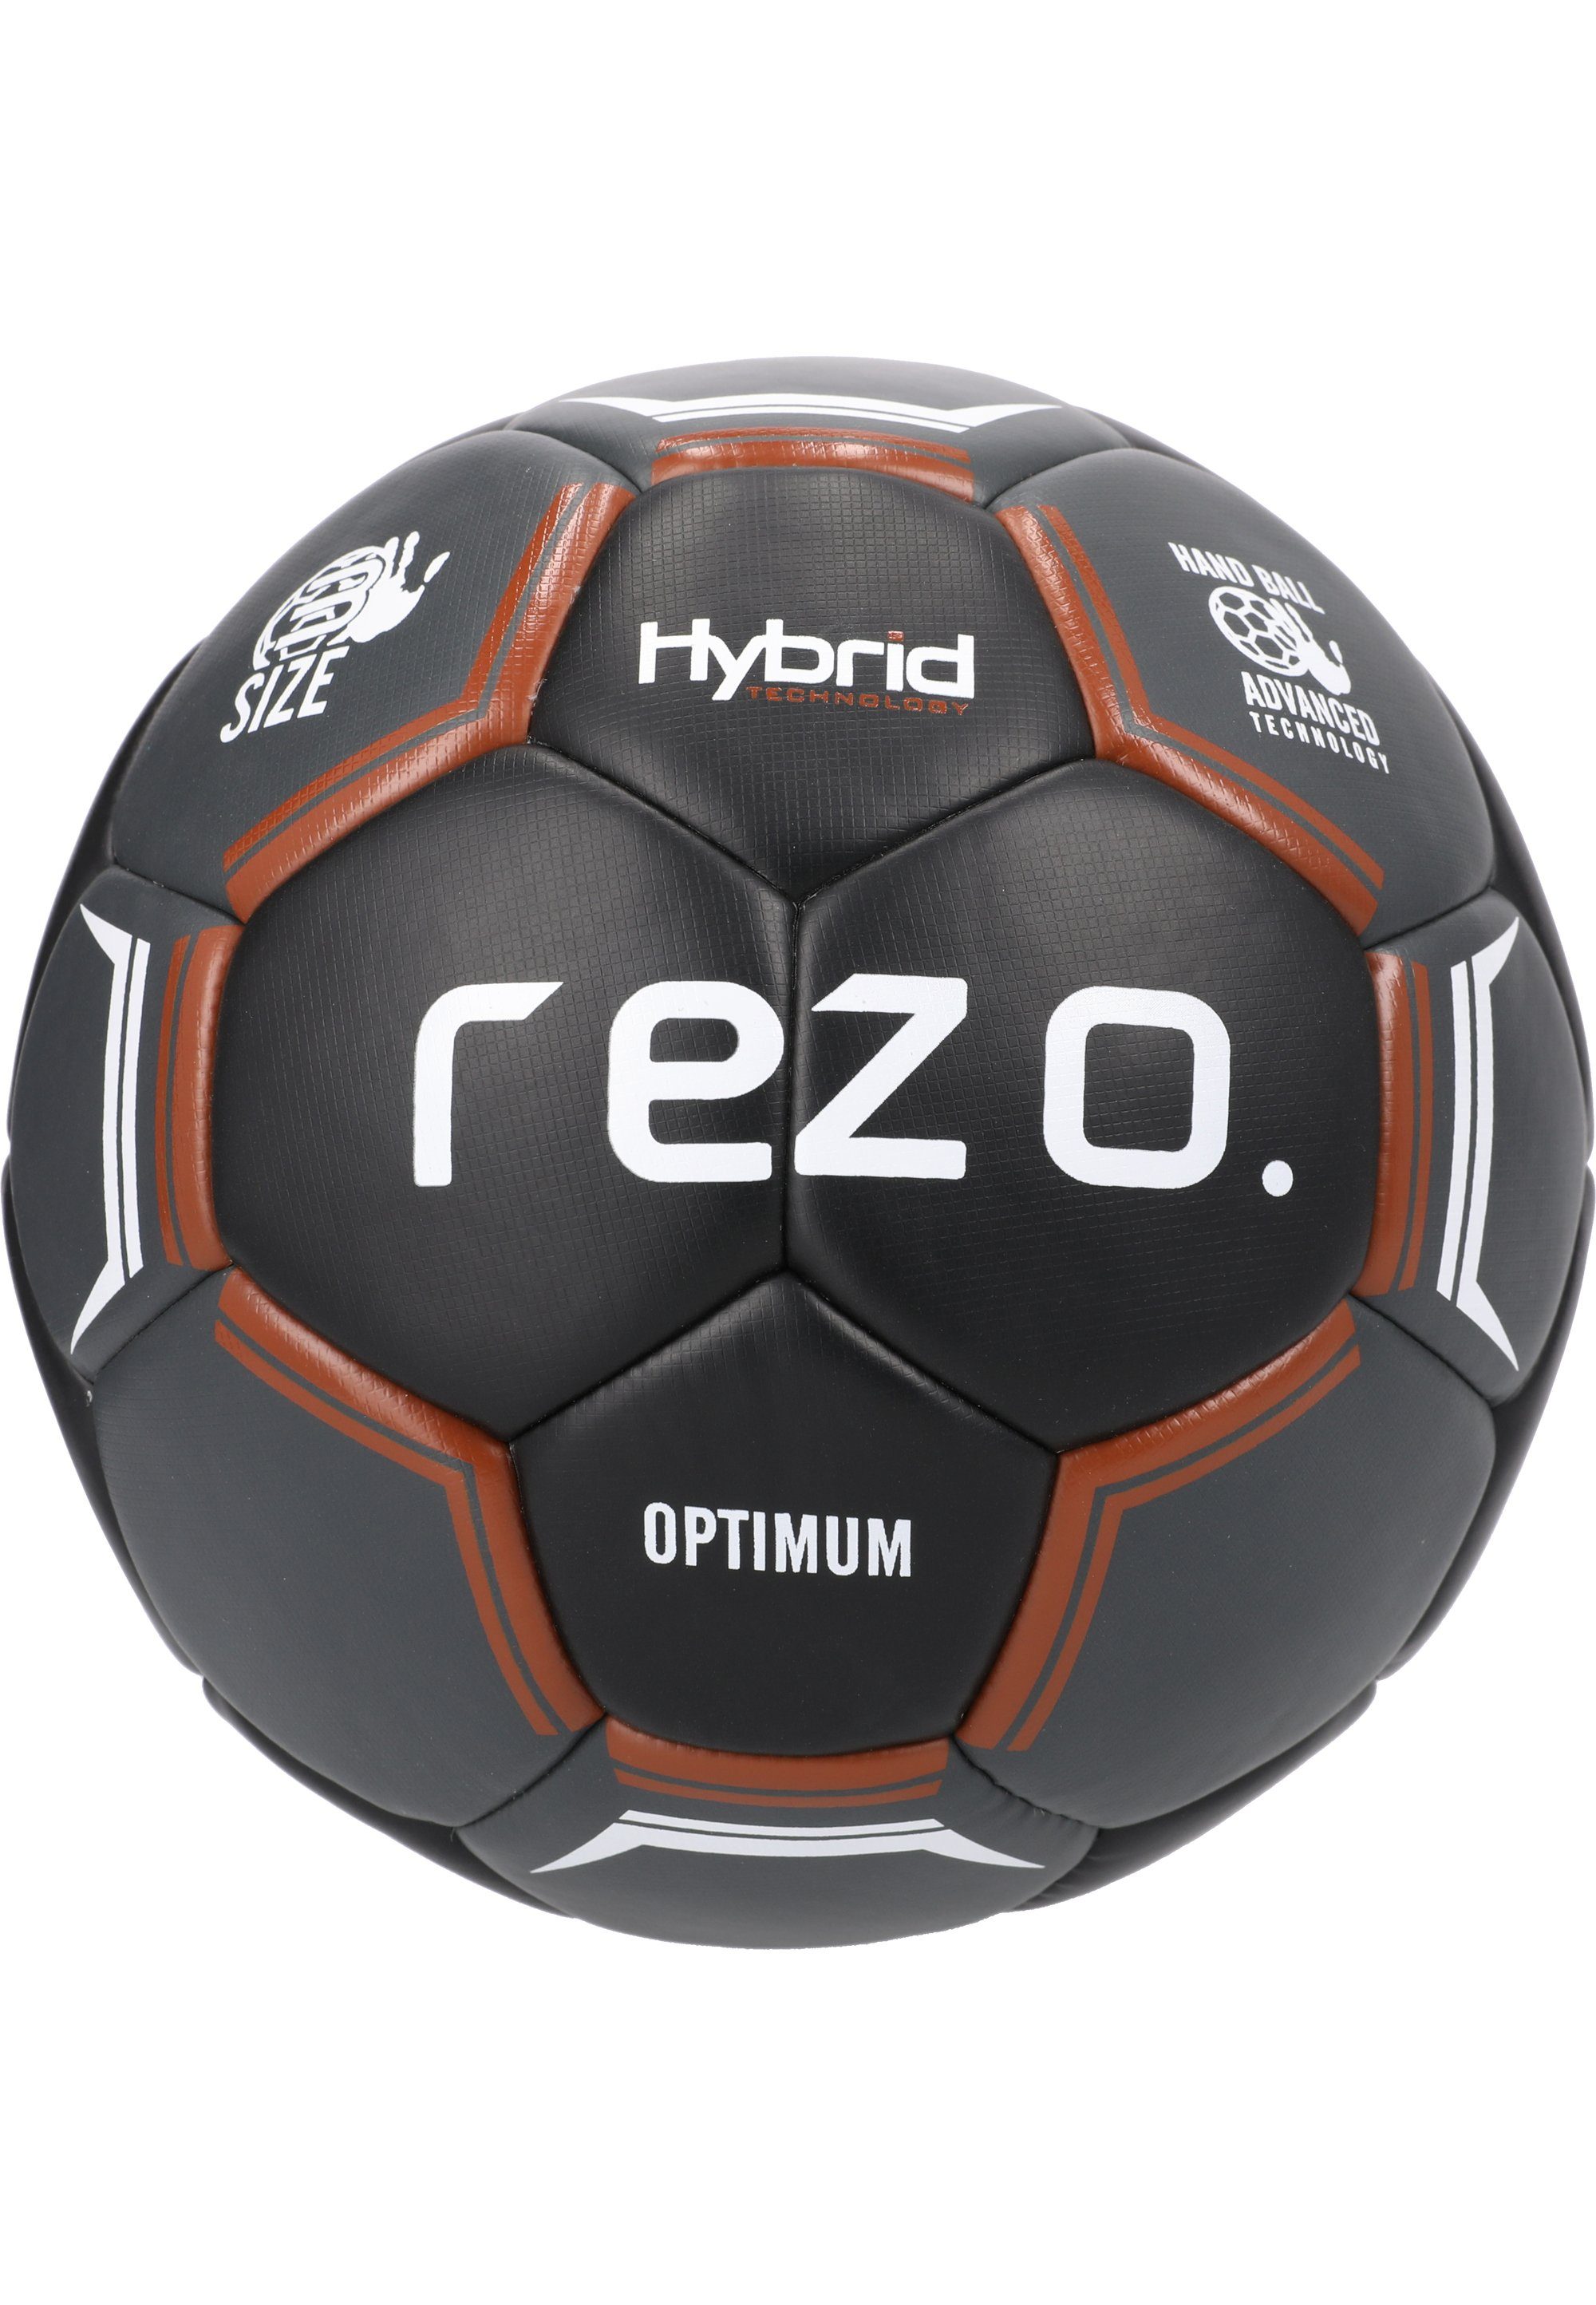 Handball Optimum, Oberfläche mit Rezo griffiger